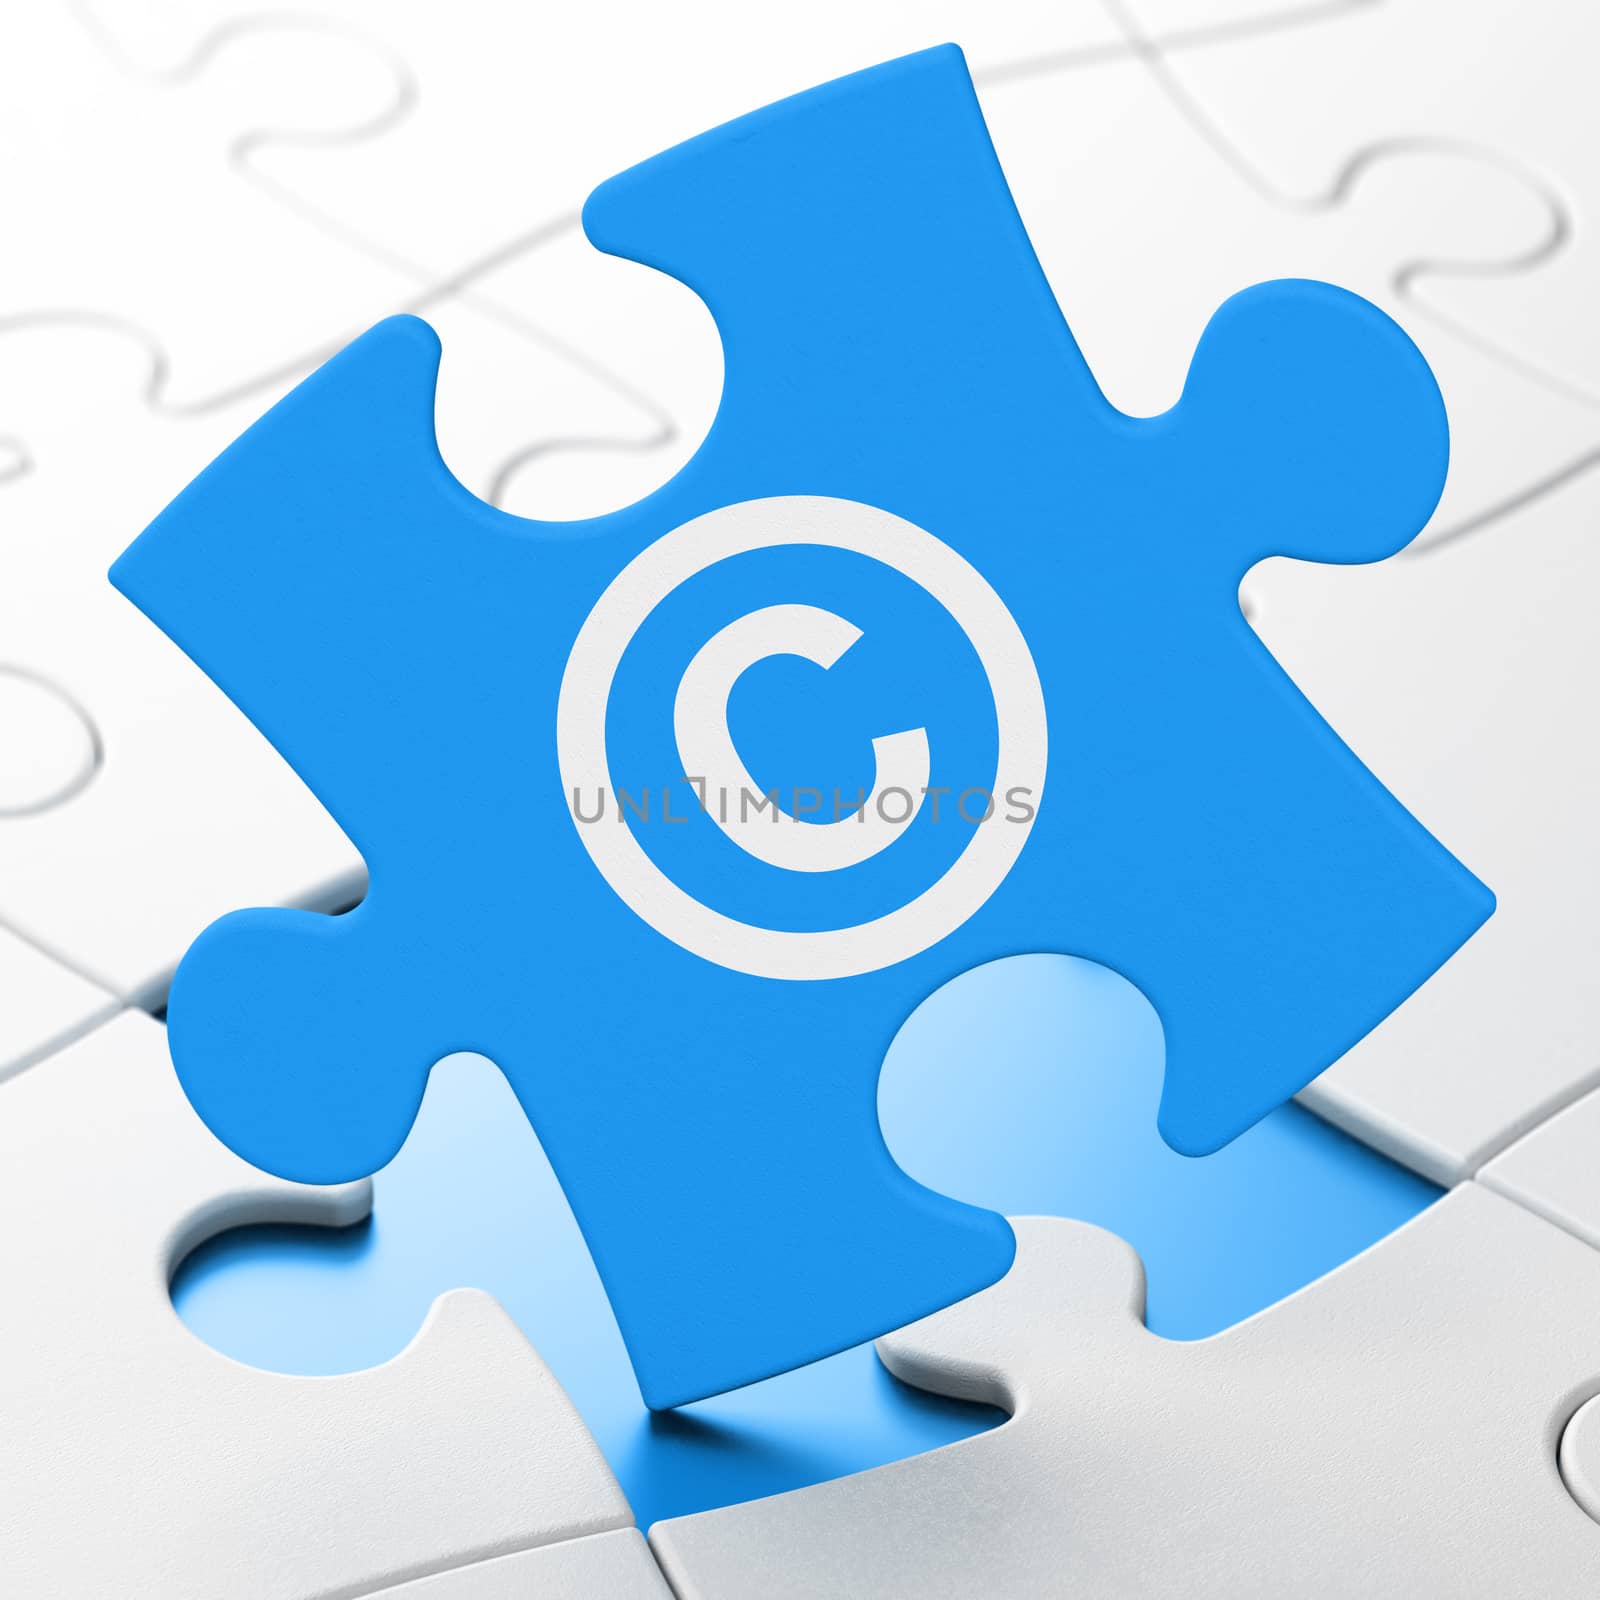 Law concept: Copyright on Blue puzzle pieces background, 3d render